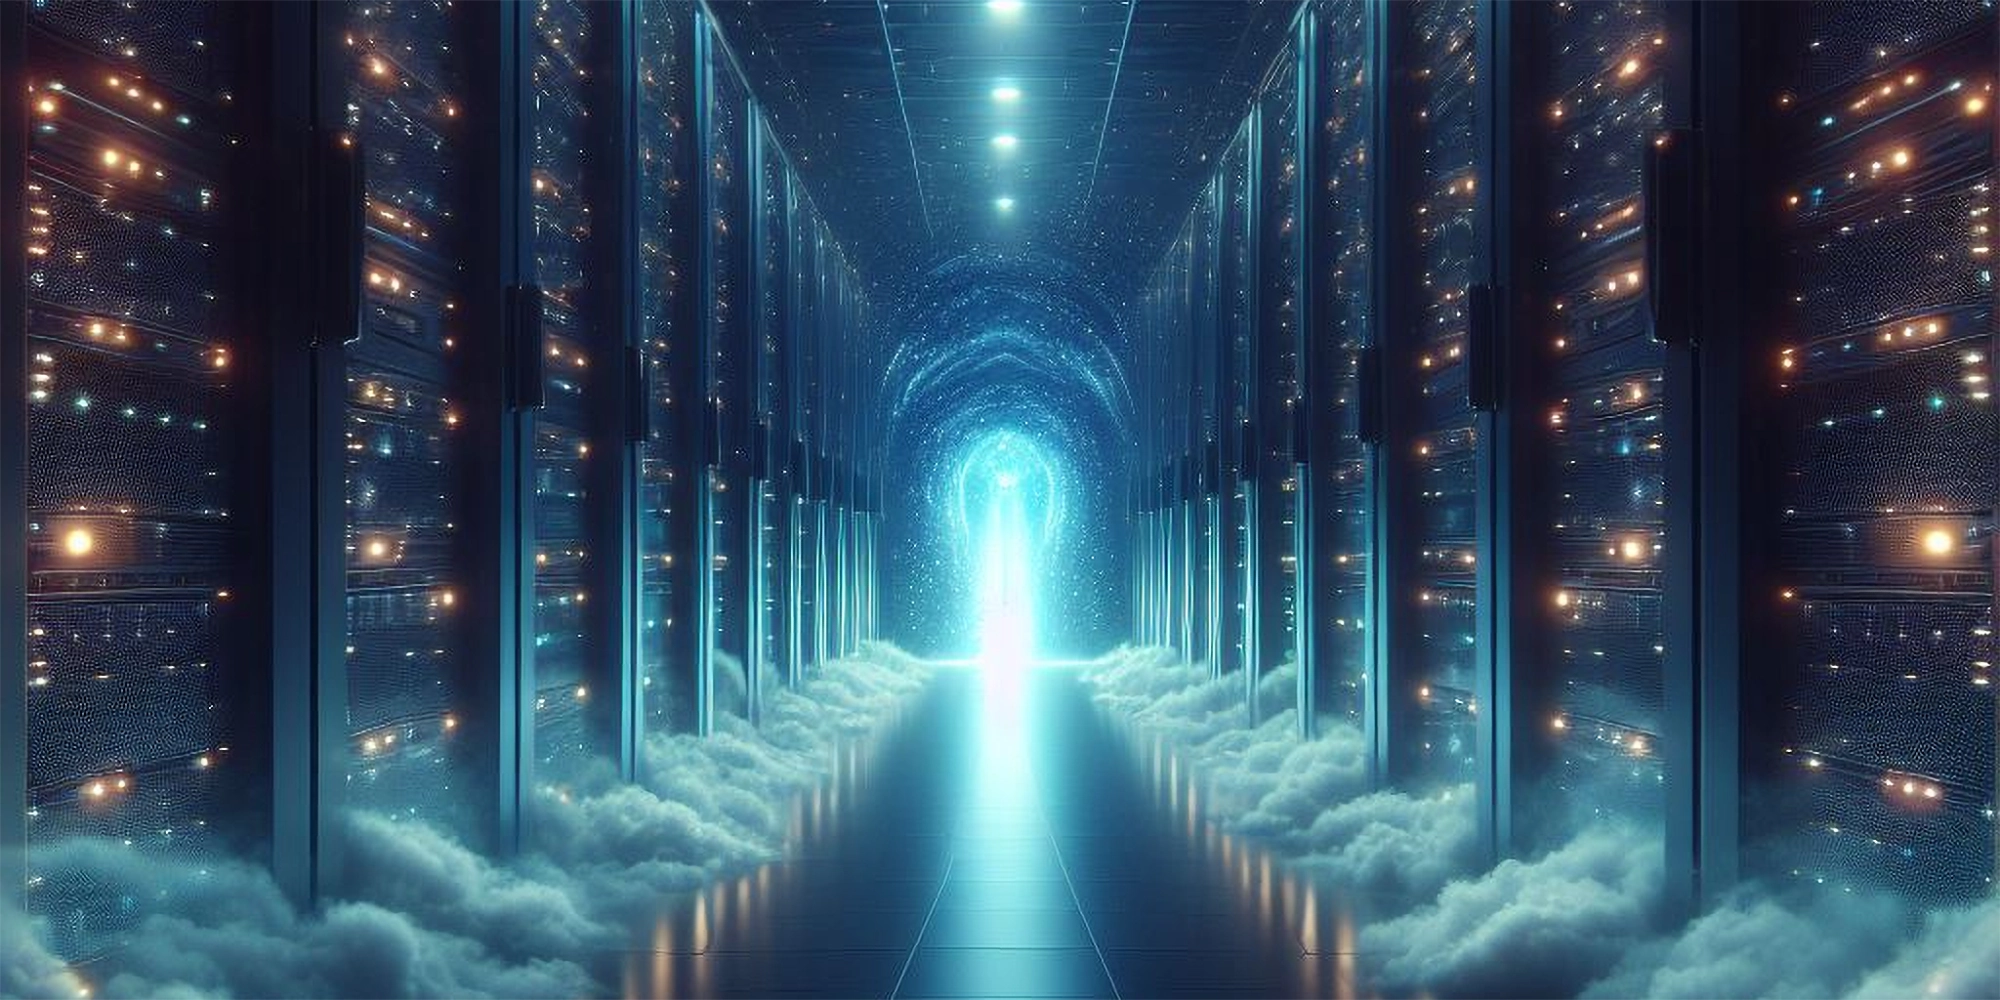 A dark hallway of servers. Blinking lights lead towards a glowing doorway